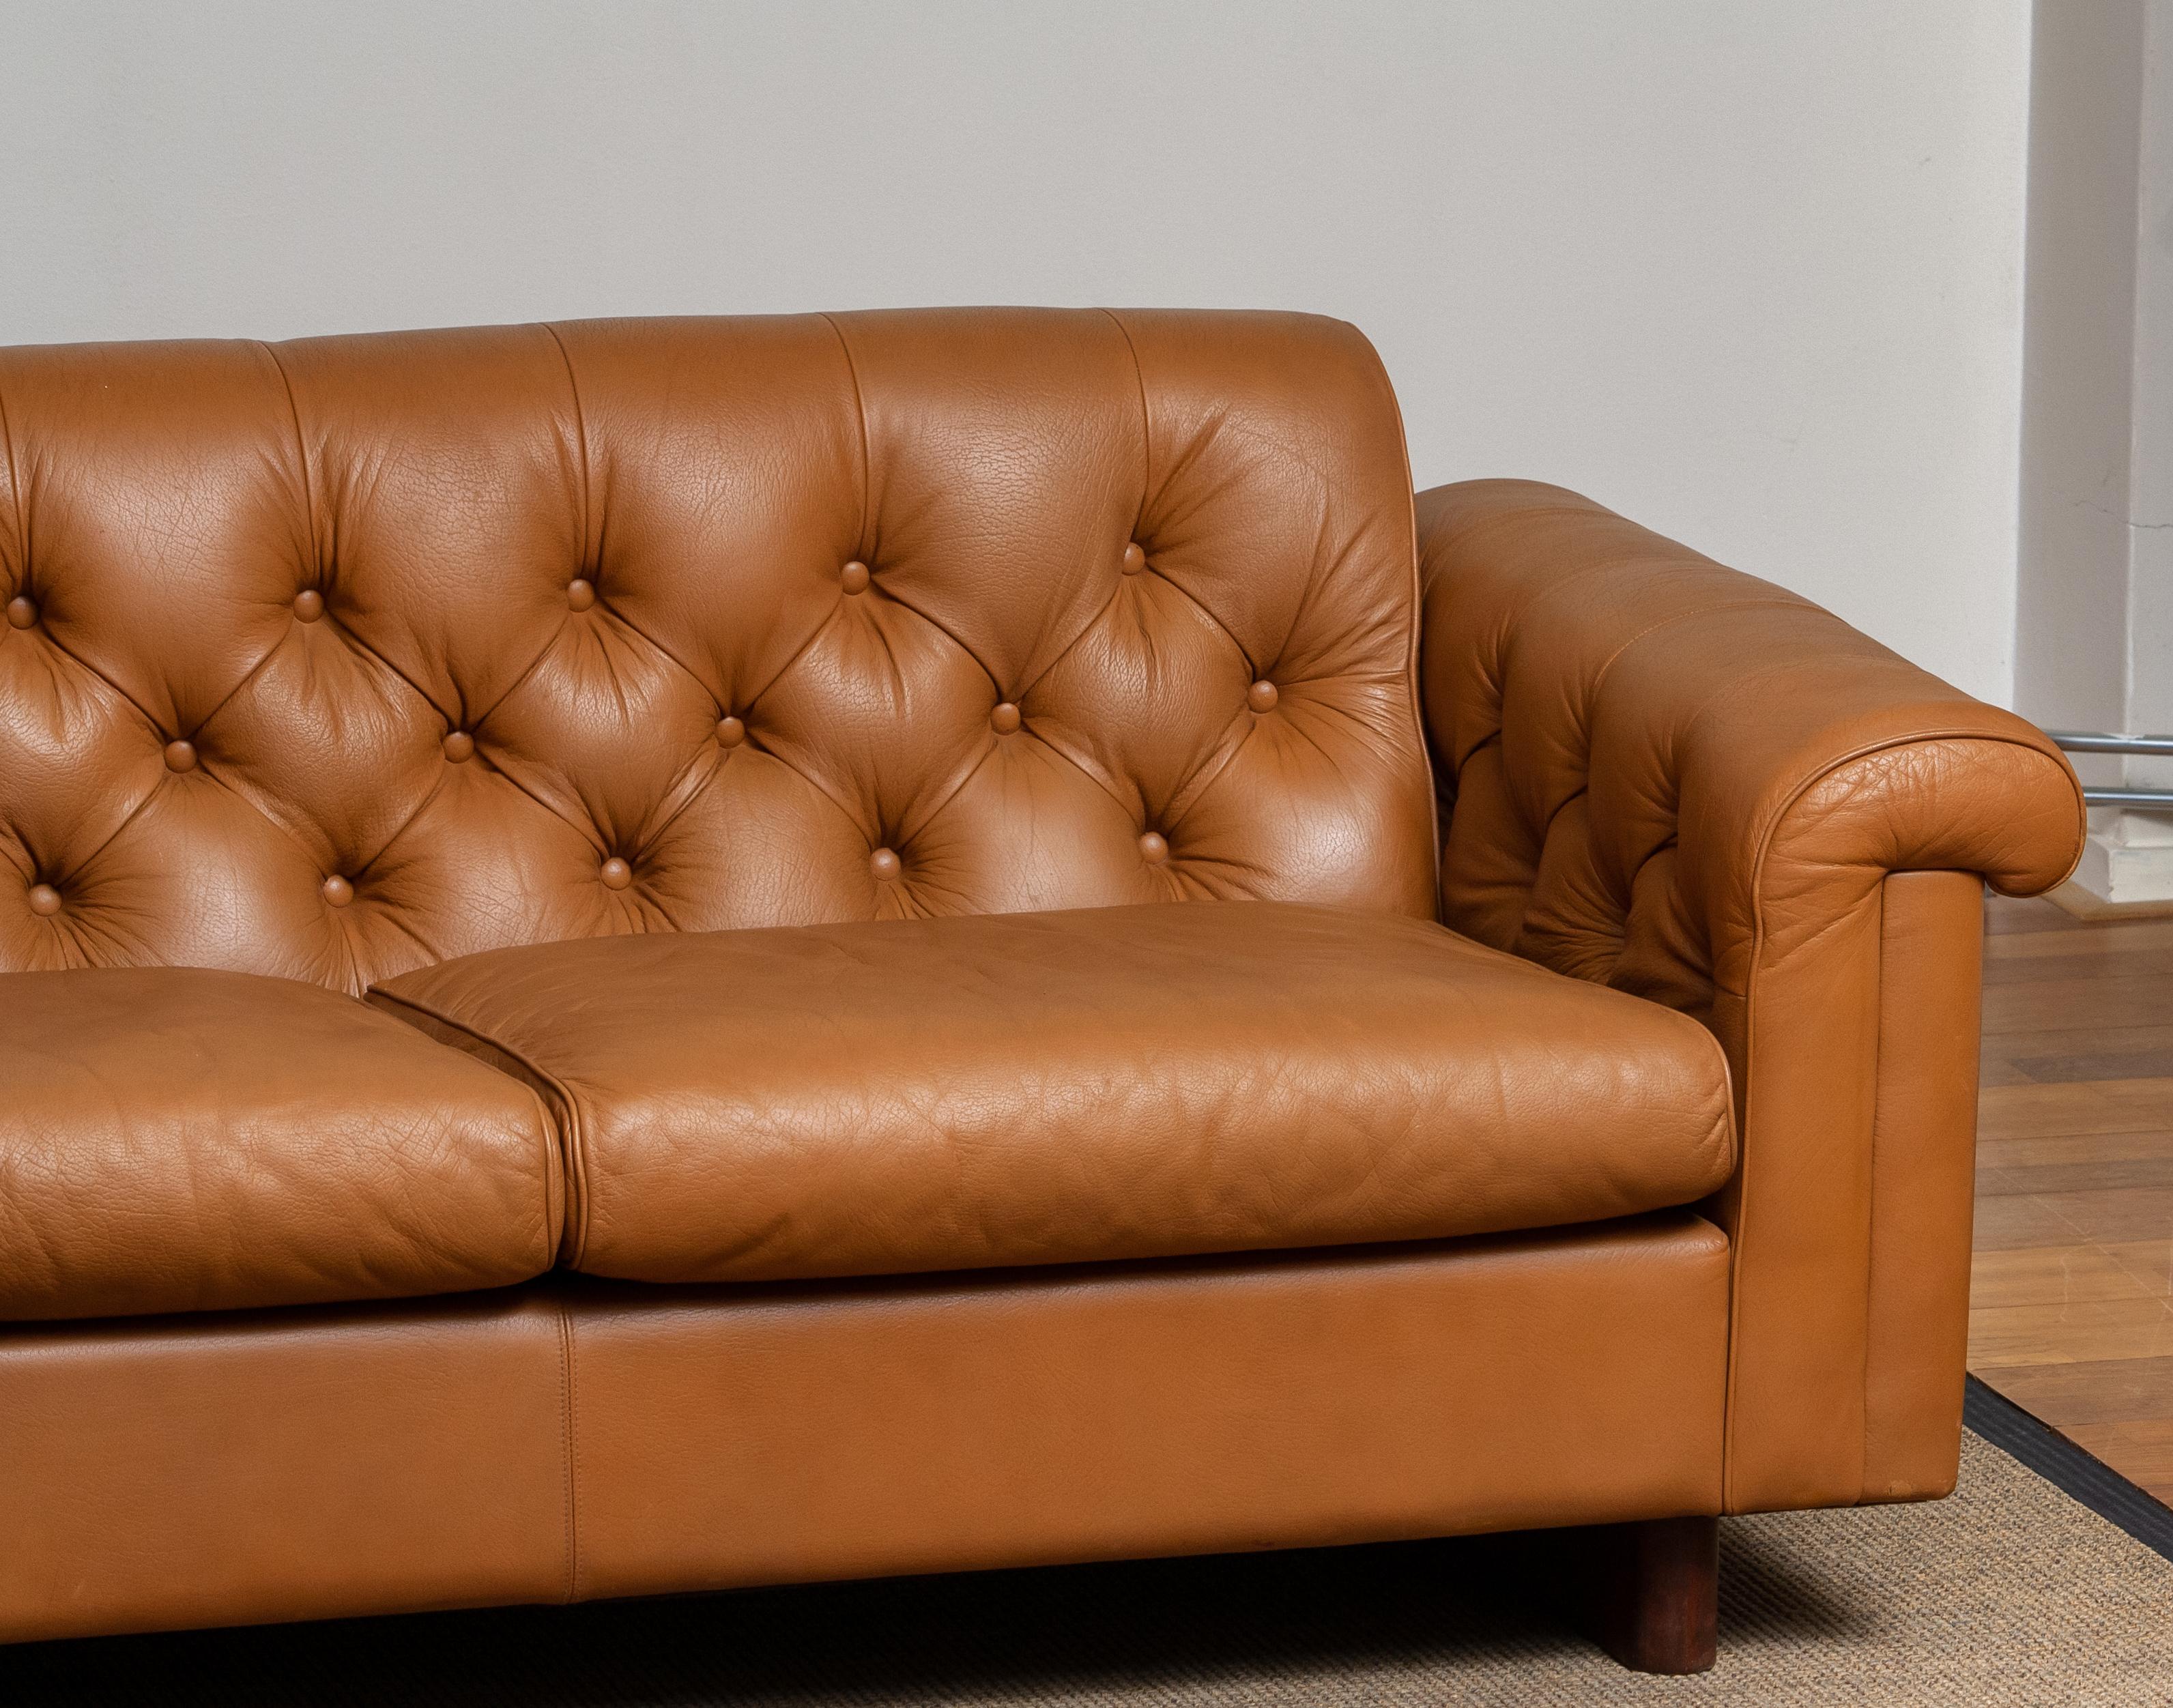 1970's Sofa by Karl Erik Ekselius for JOC Design in Camel Color Tufted Leather In Good Condition In Silvolde, Gelderland